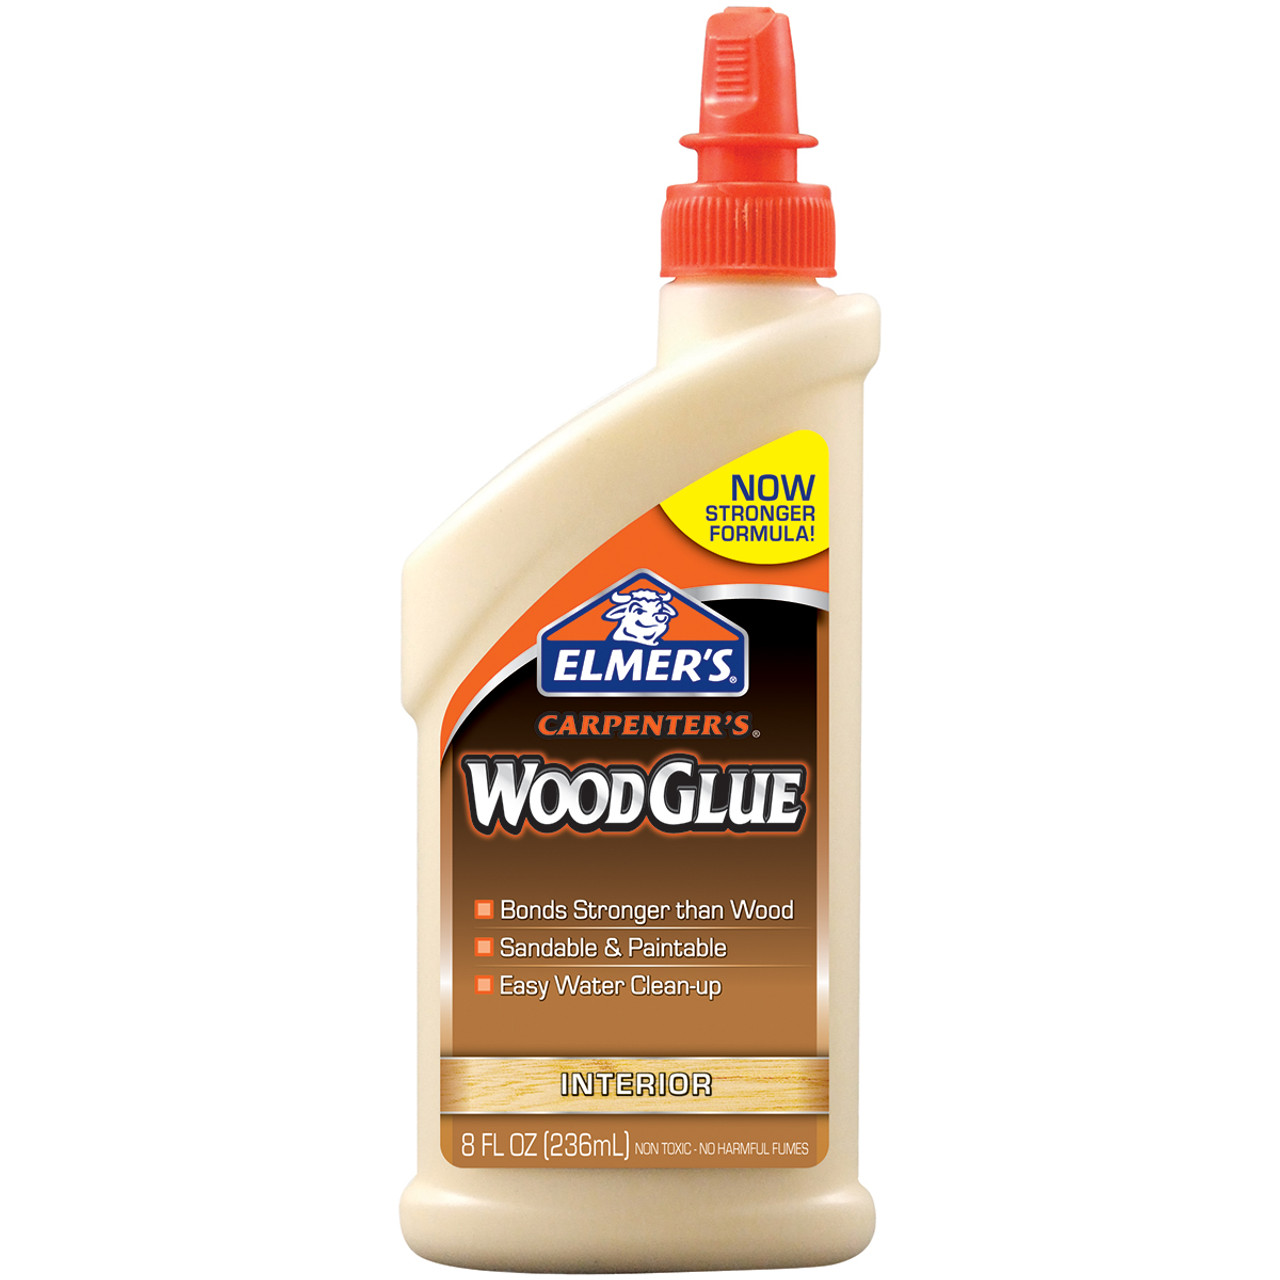 Elmer's Stainable Wood Glue Max - 16 oz